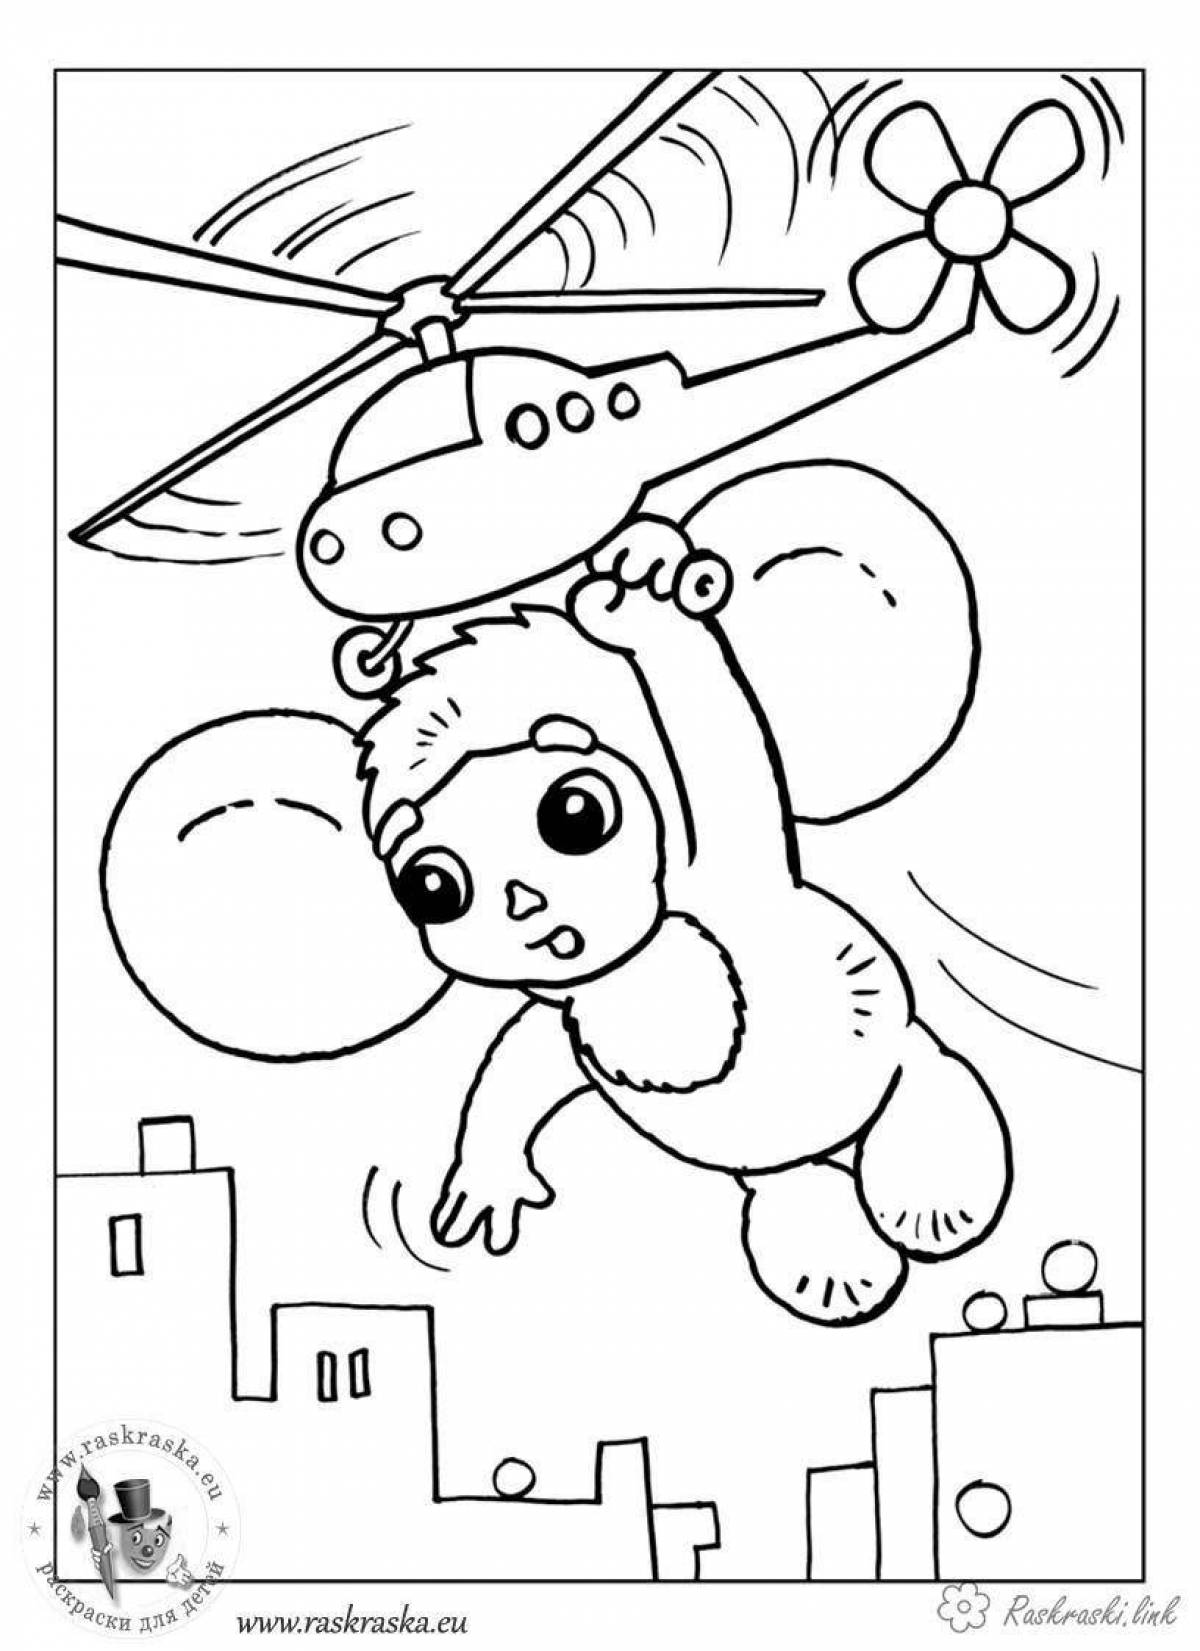 Charming picture of cheburashka for kids